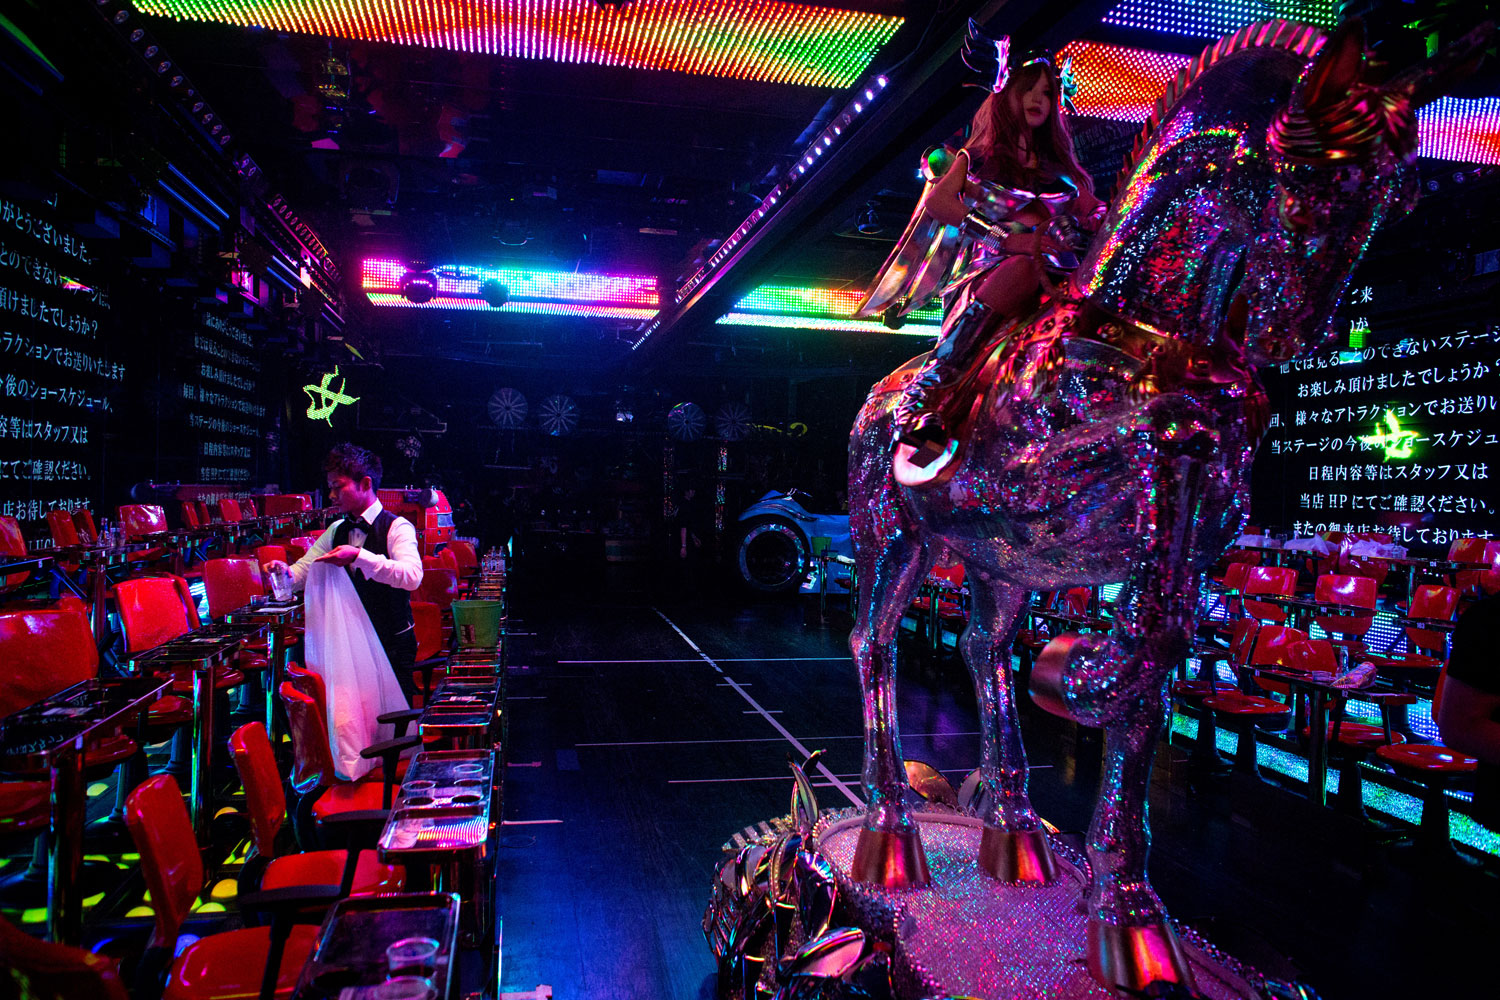 Inside Robot Cabaret 'Robot Restaurant" In Tokyo